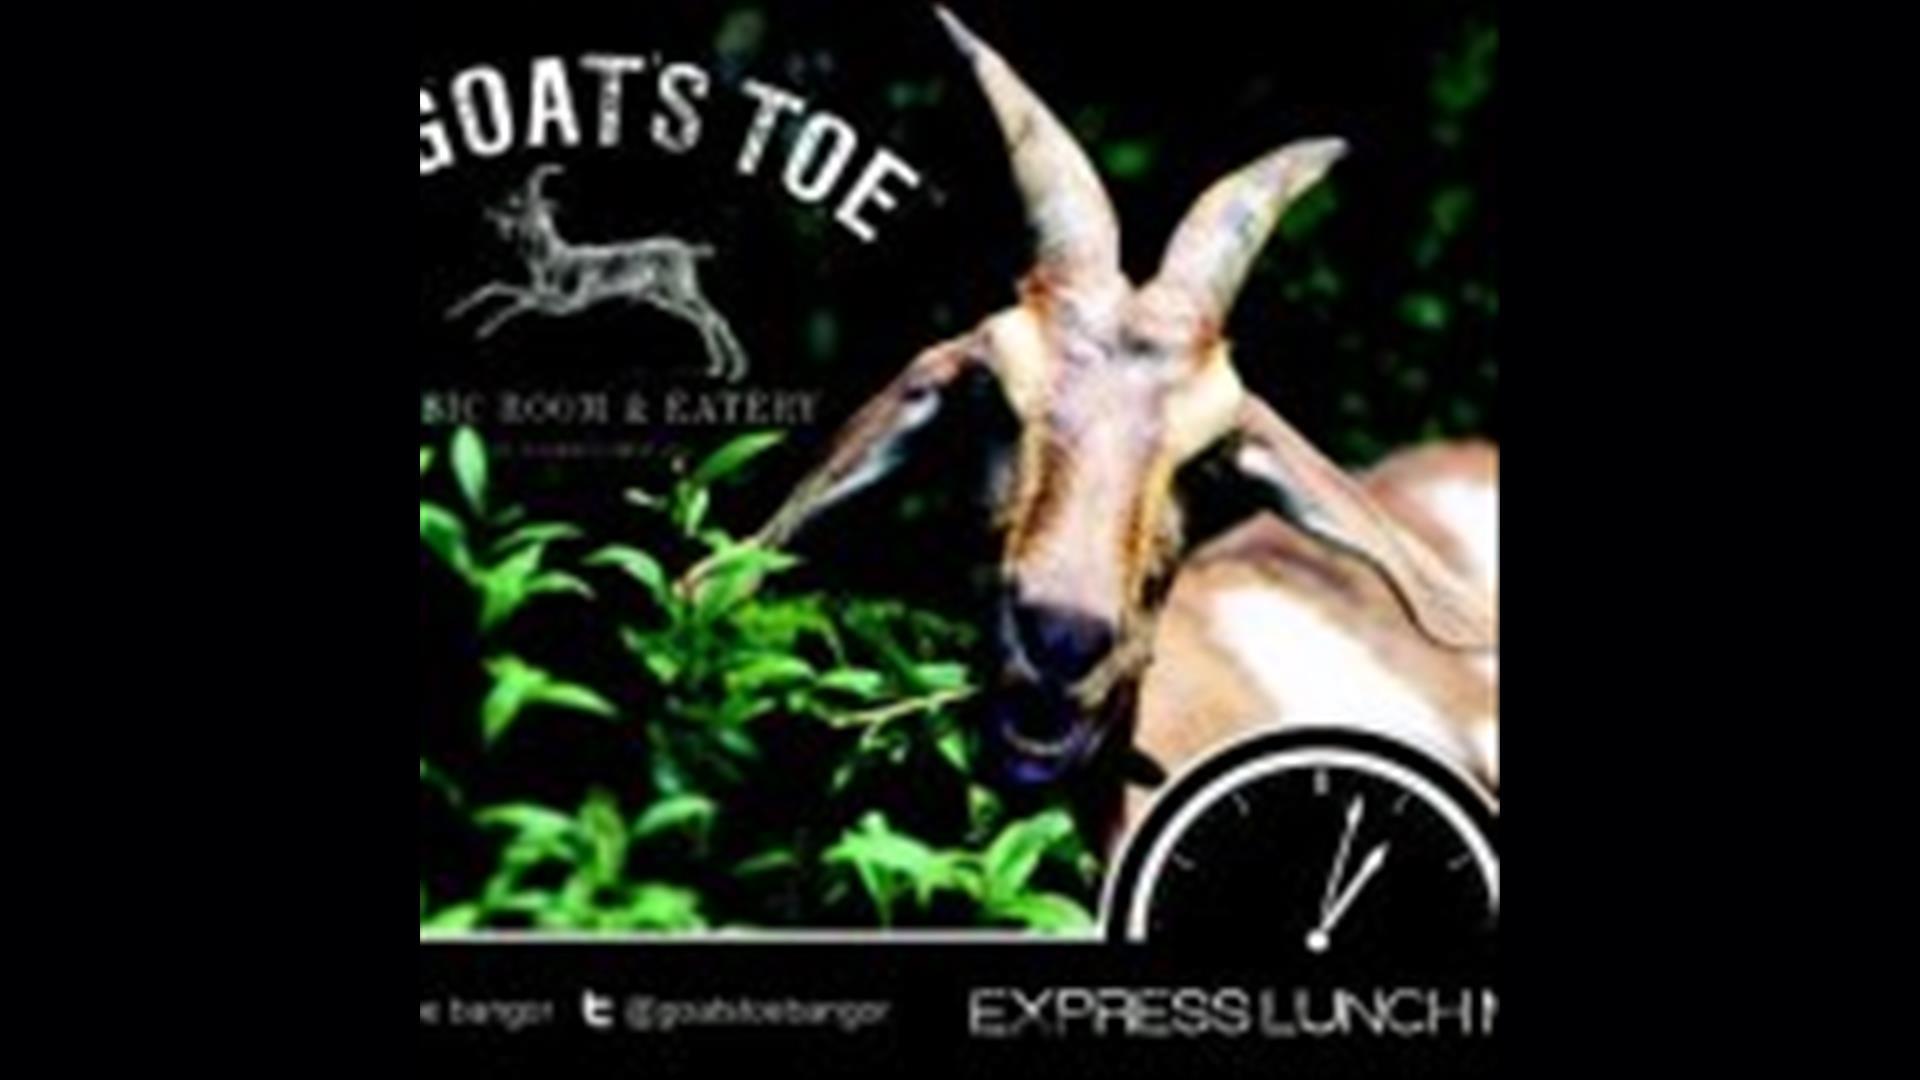 The Goat's Toe logo